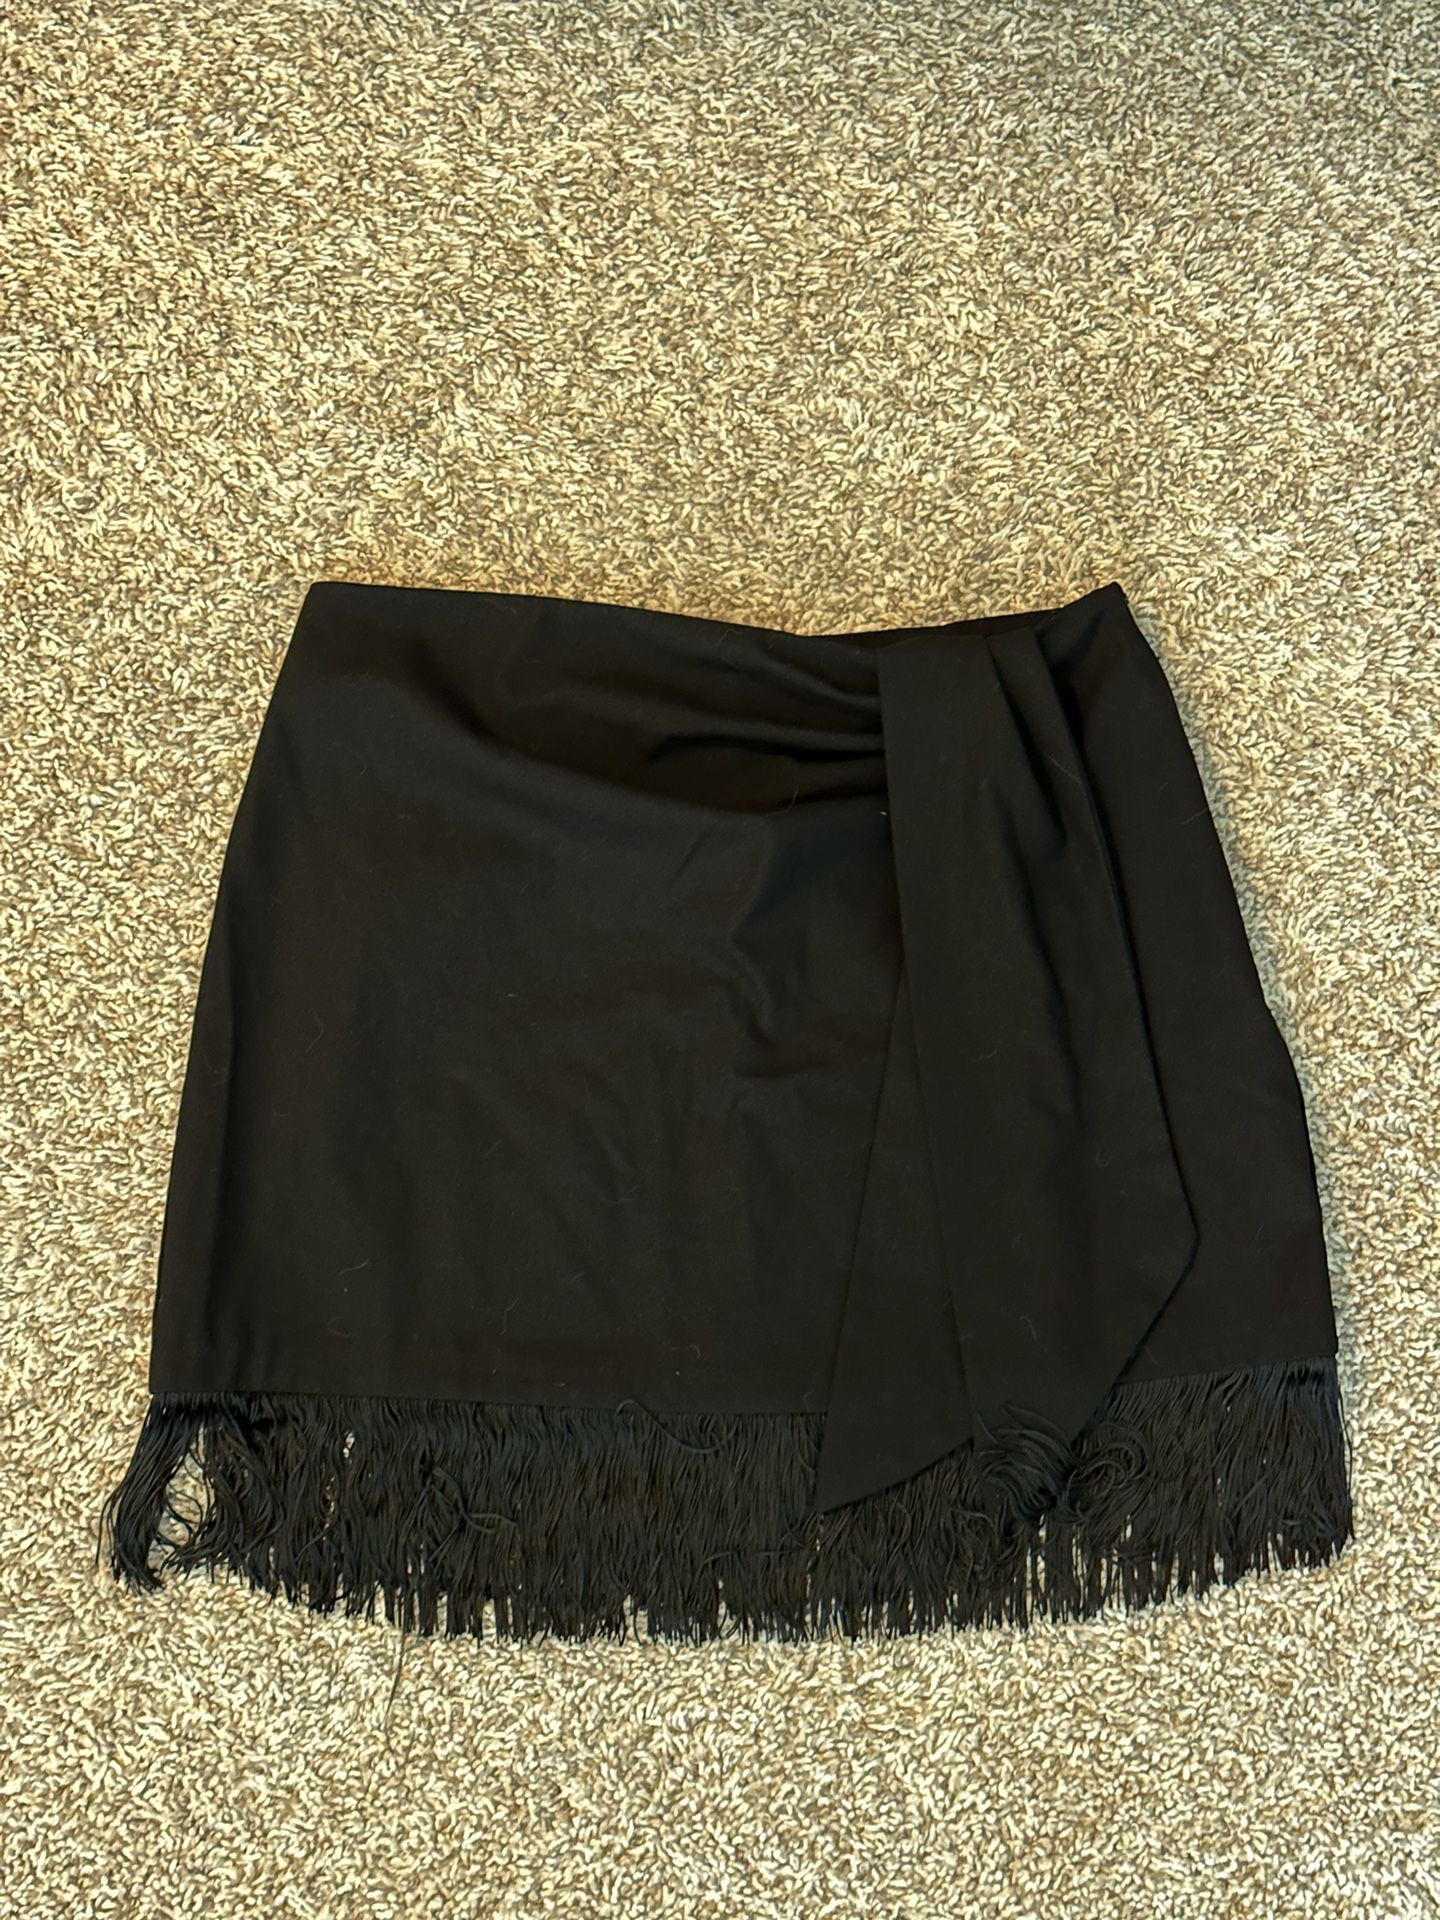 Zara Mini Black Skirt